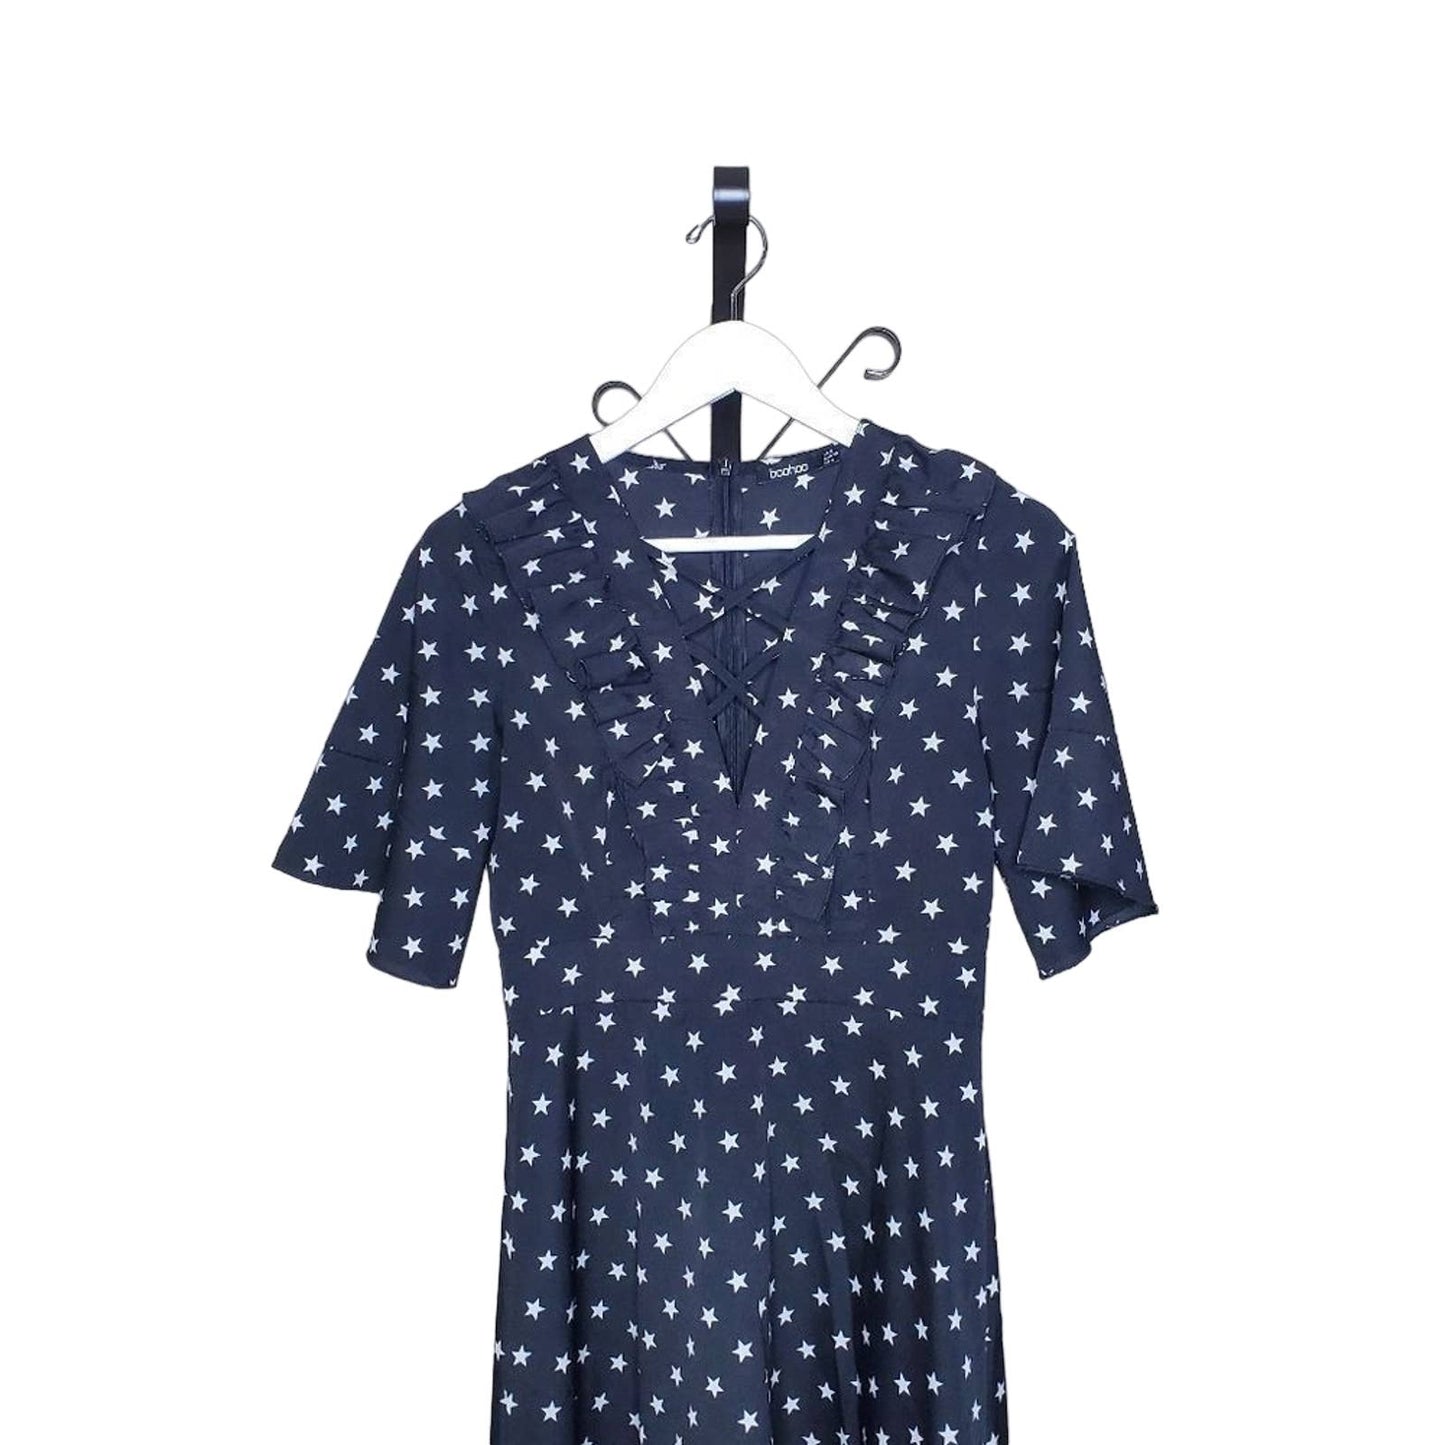 Boohoo Black and White Allover Star Print Cap Sleeve Midi Dress, Size UK8/US4